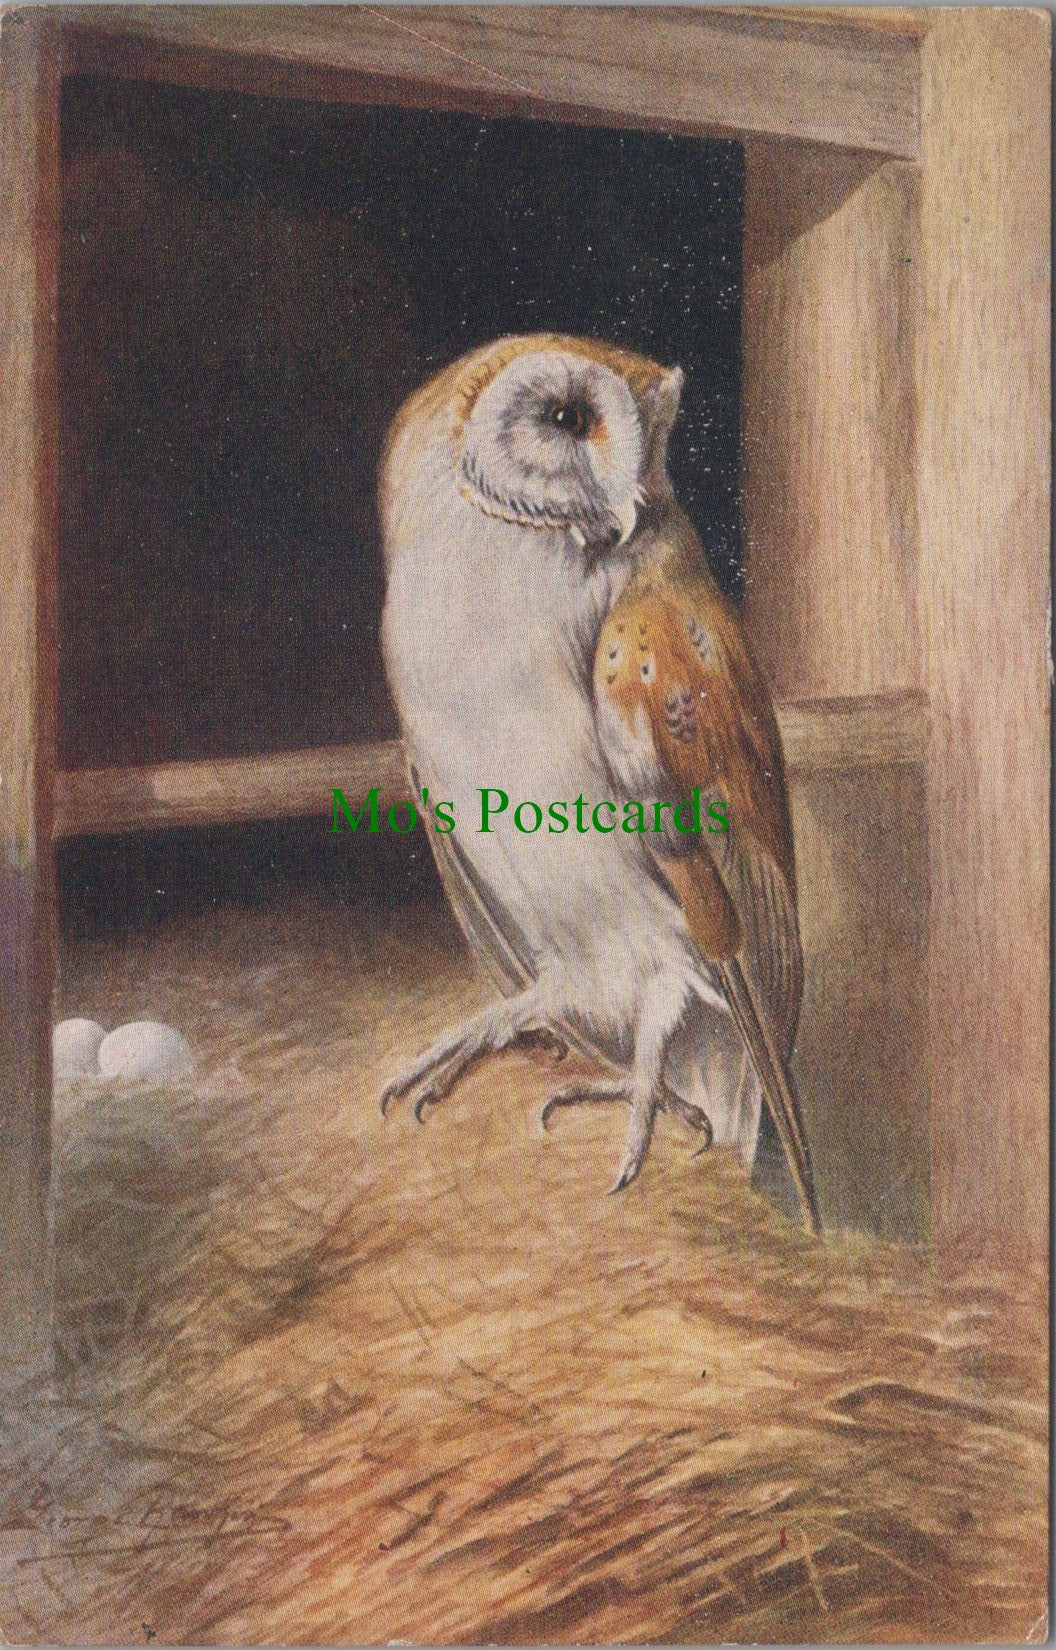 Birds Postcard - Owl on Nest